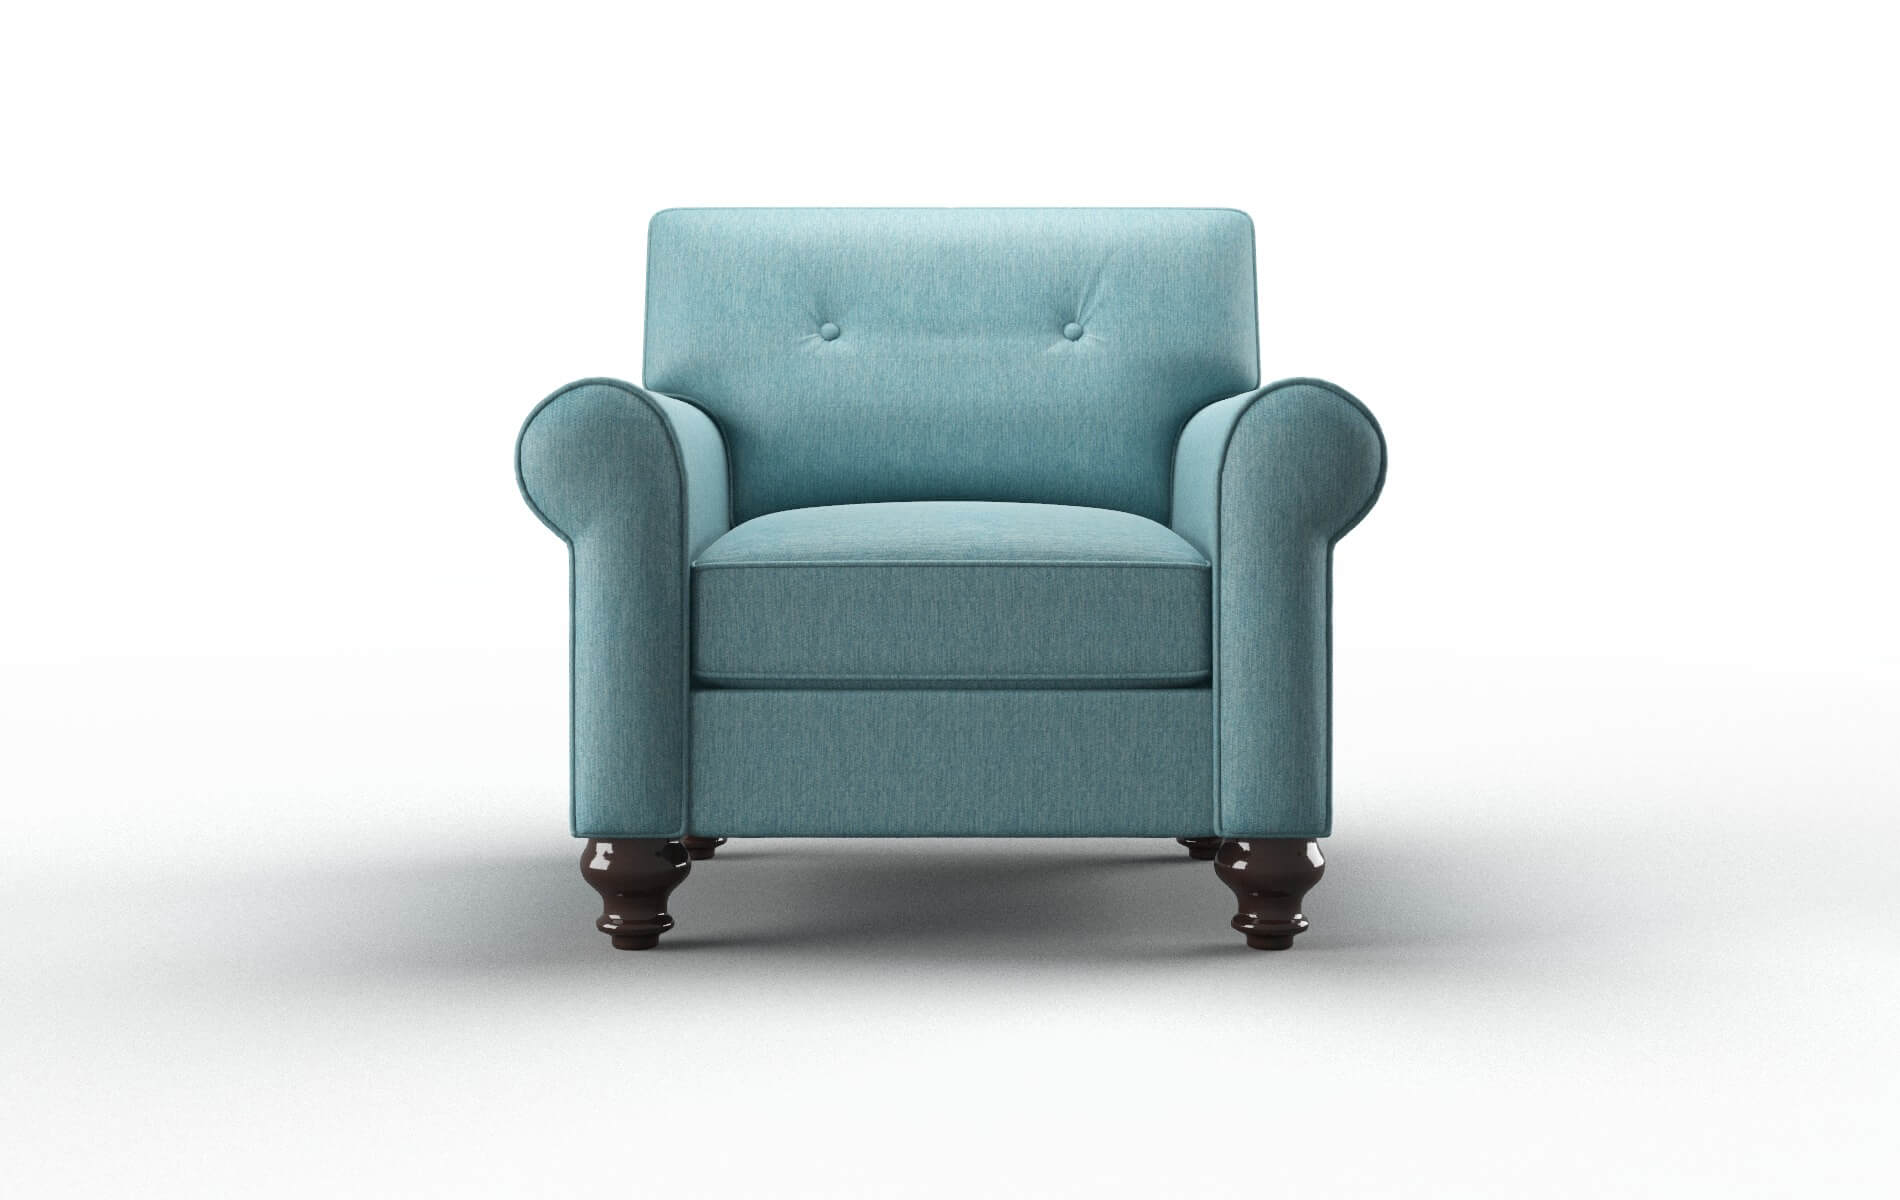 Farah Cosmo Turquoise chair espresso legs